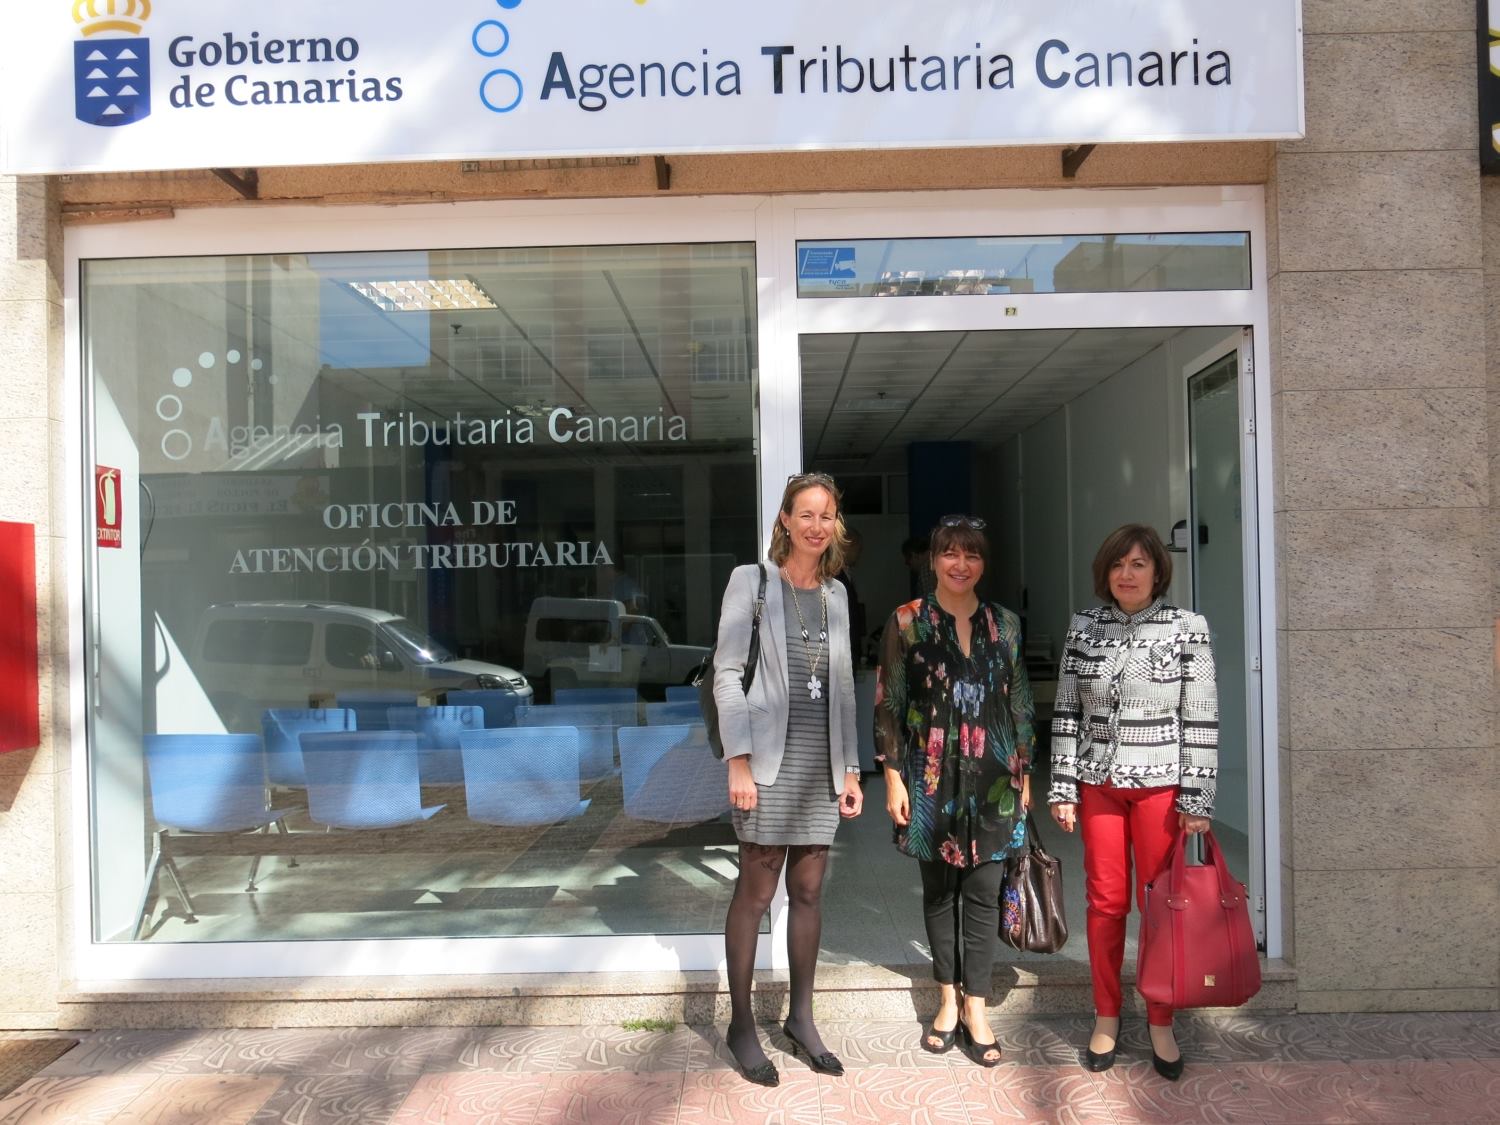 0Informacin tributaria bsica - Agencia Tributaria Canaria